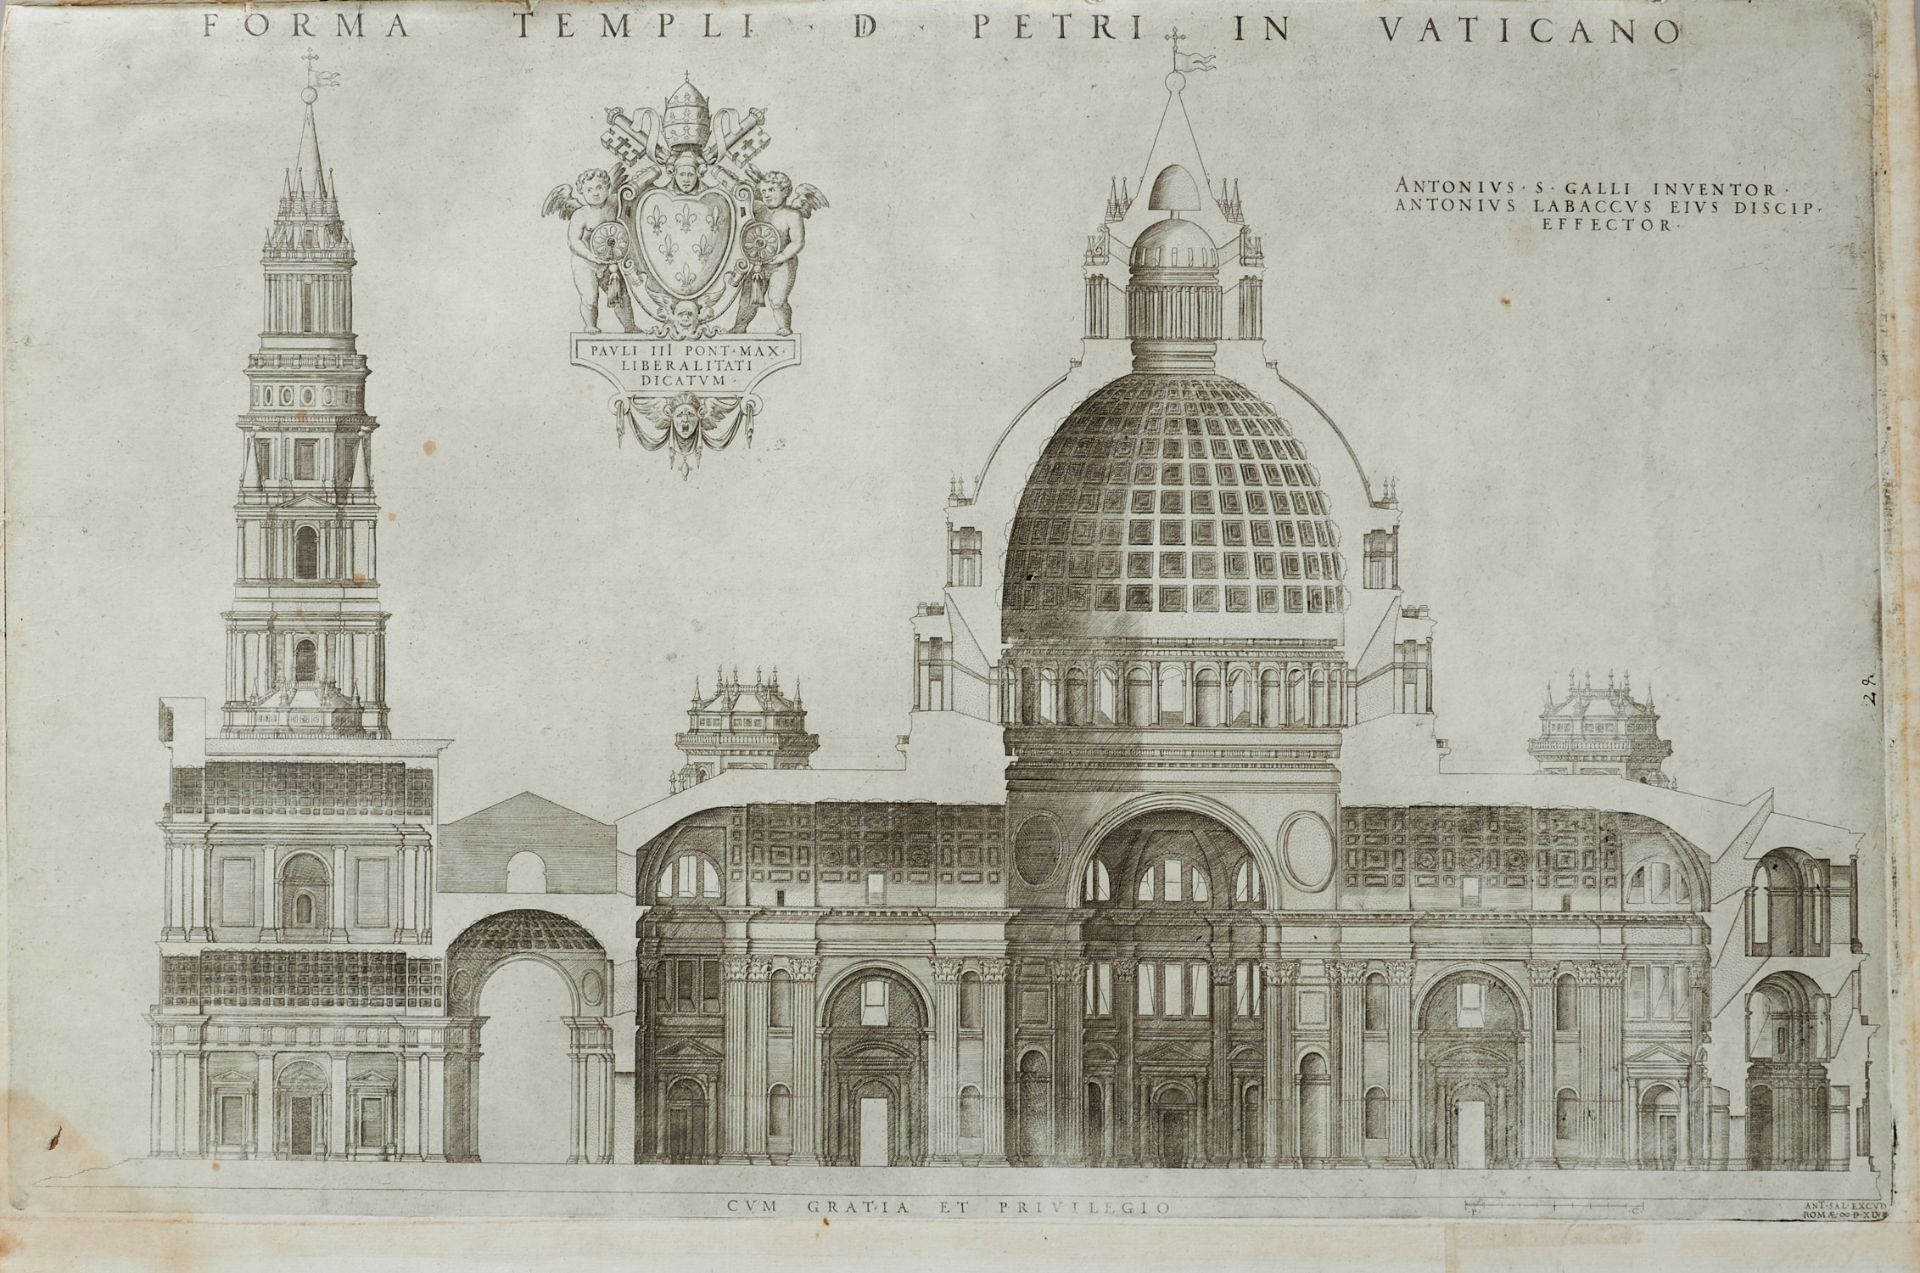 Labacco, Antonio da (Vigevano ca. 1495 - ca. 1567), "Forma templi D. Petri in Vaticano". Fassade des - Bild 2 aus 2